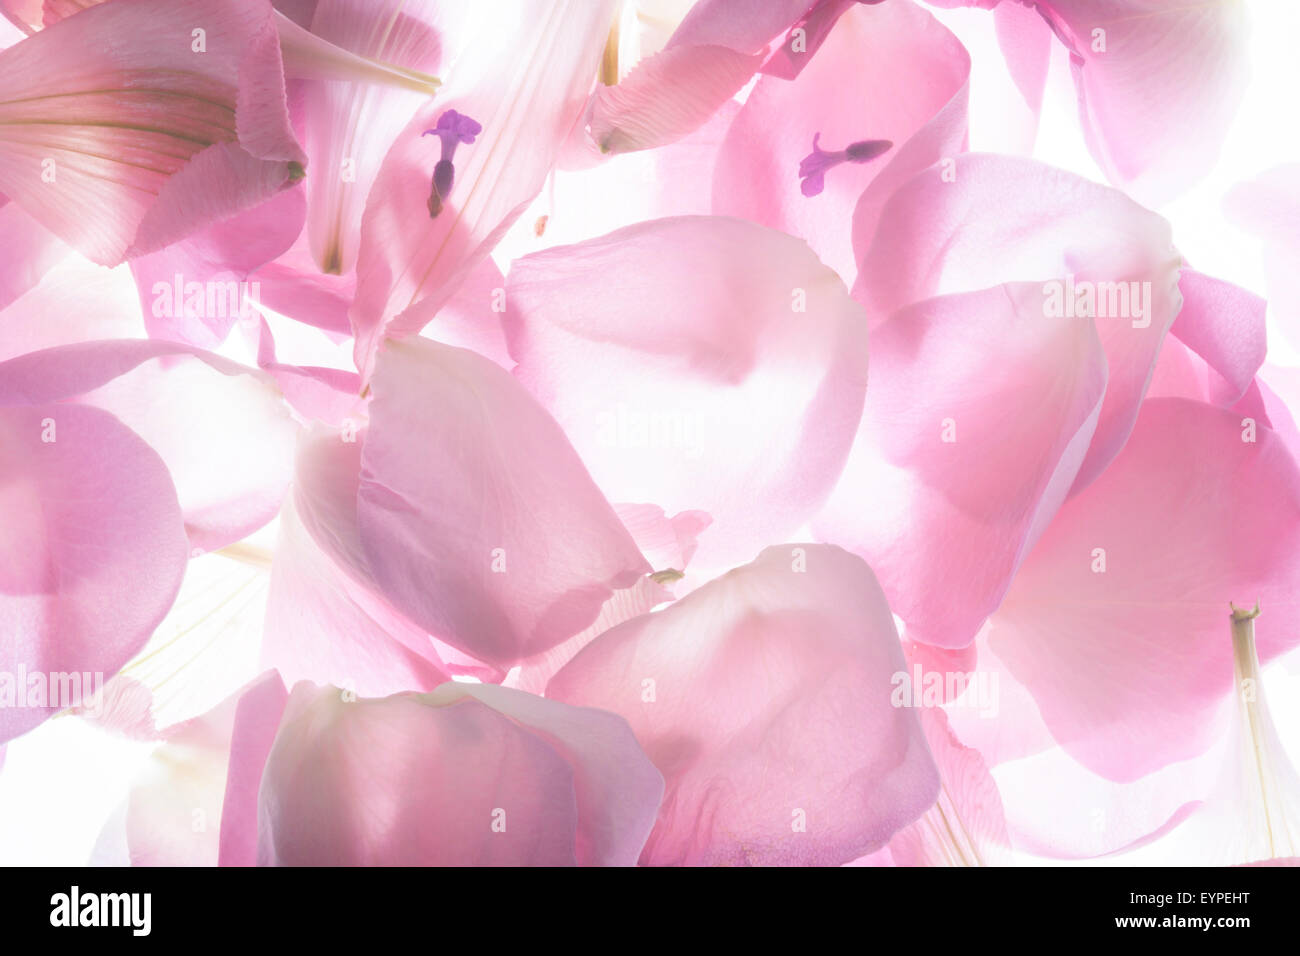 Soft focus pink petals Stock Photo